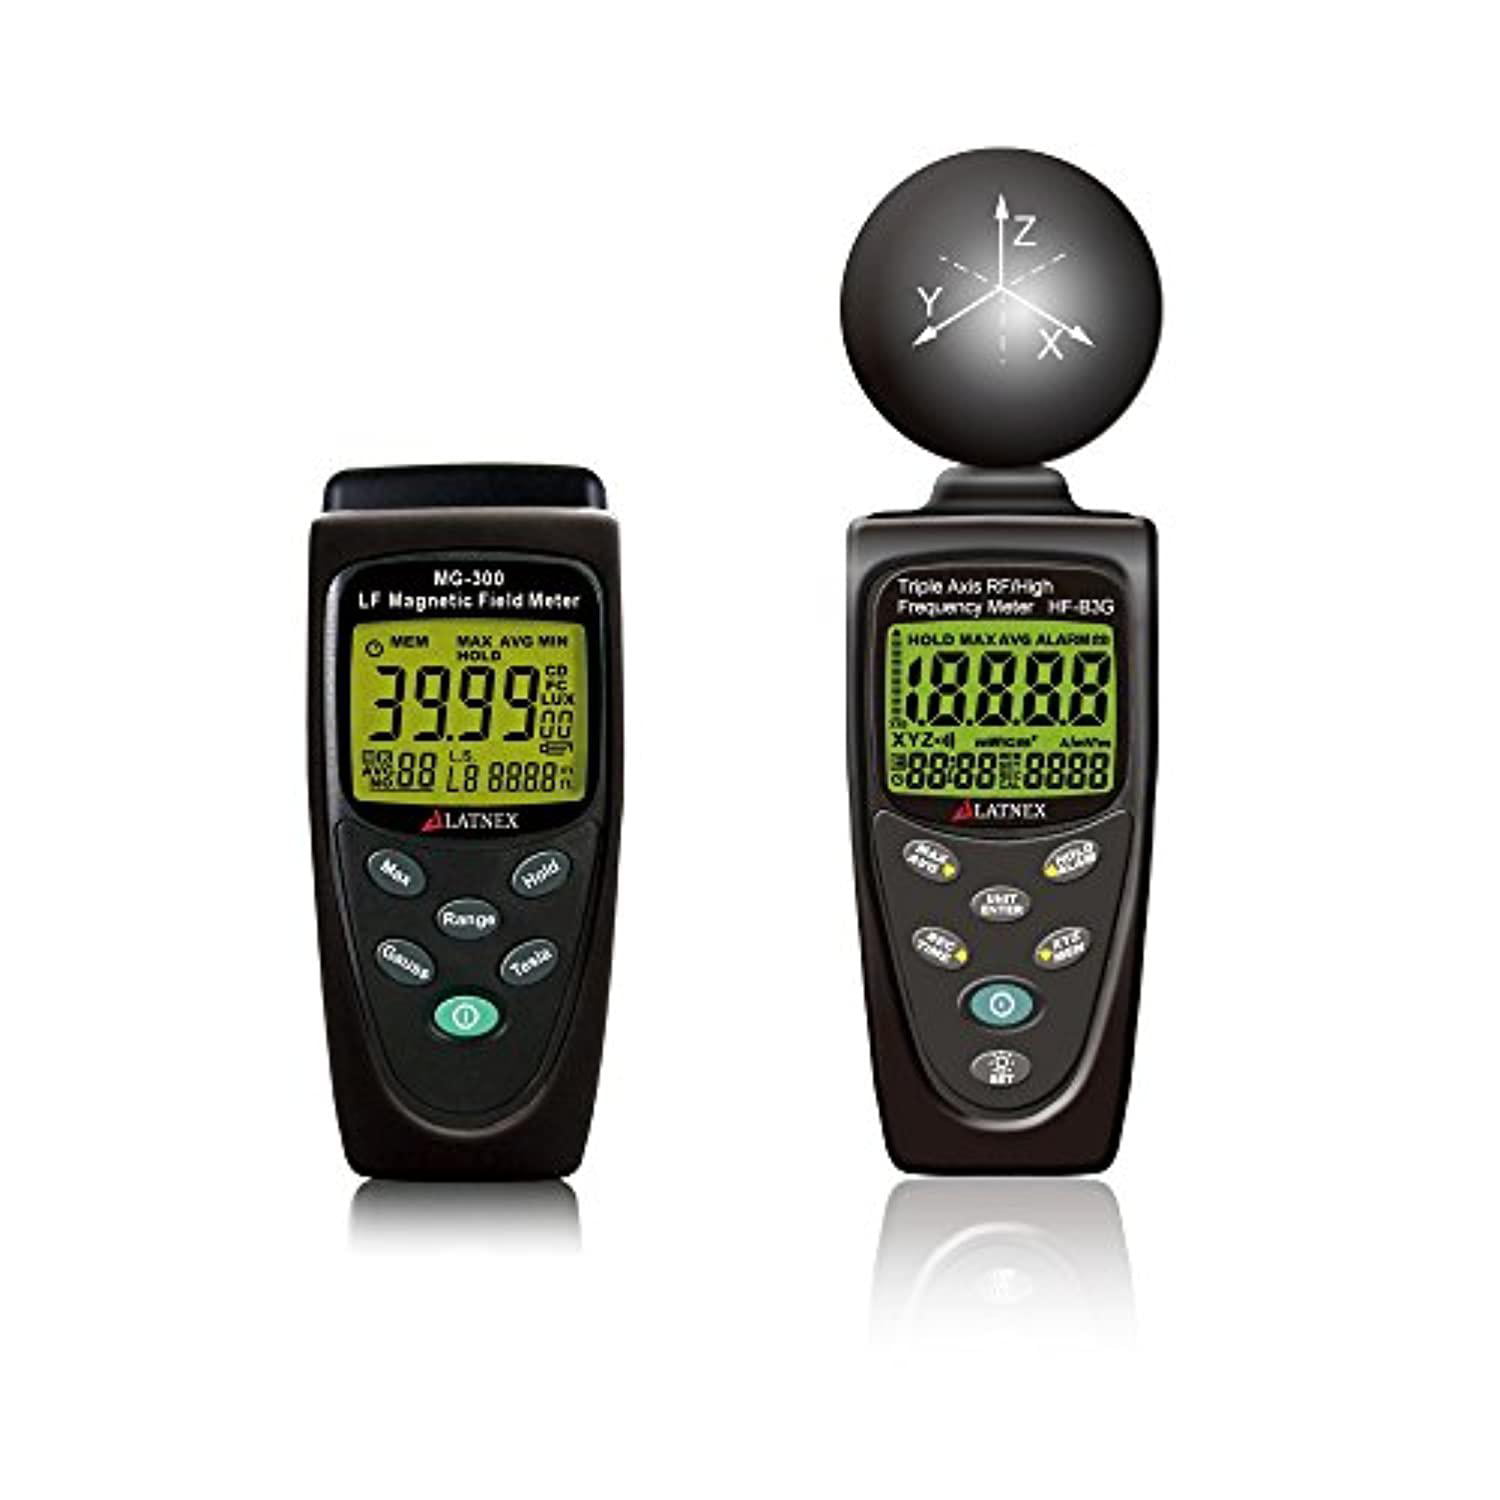 HF-B8G RF EMF Meter 5G Radiation Detector or Tester with Calibration Certificate 